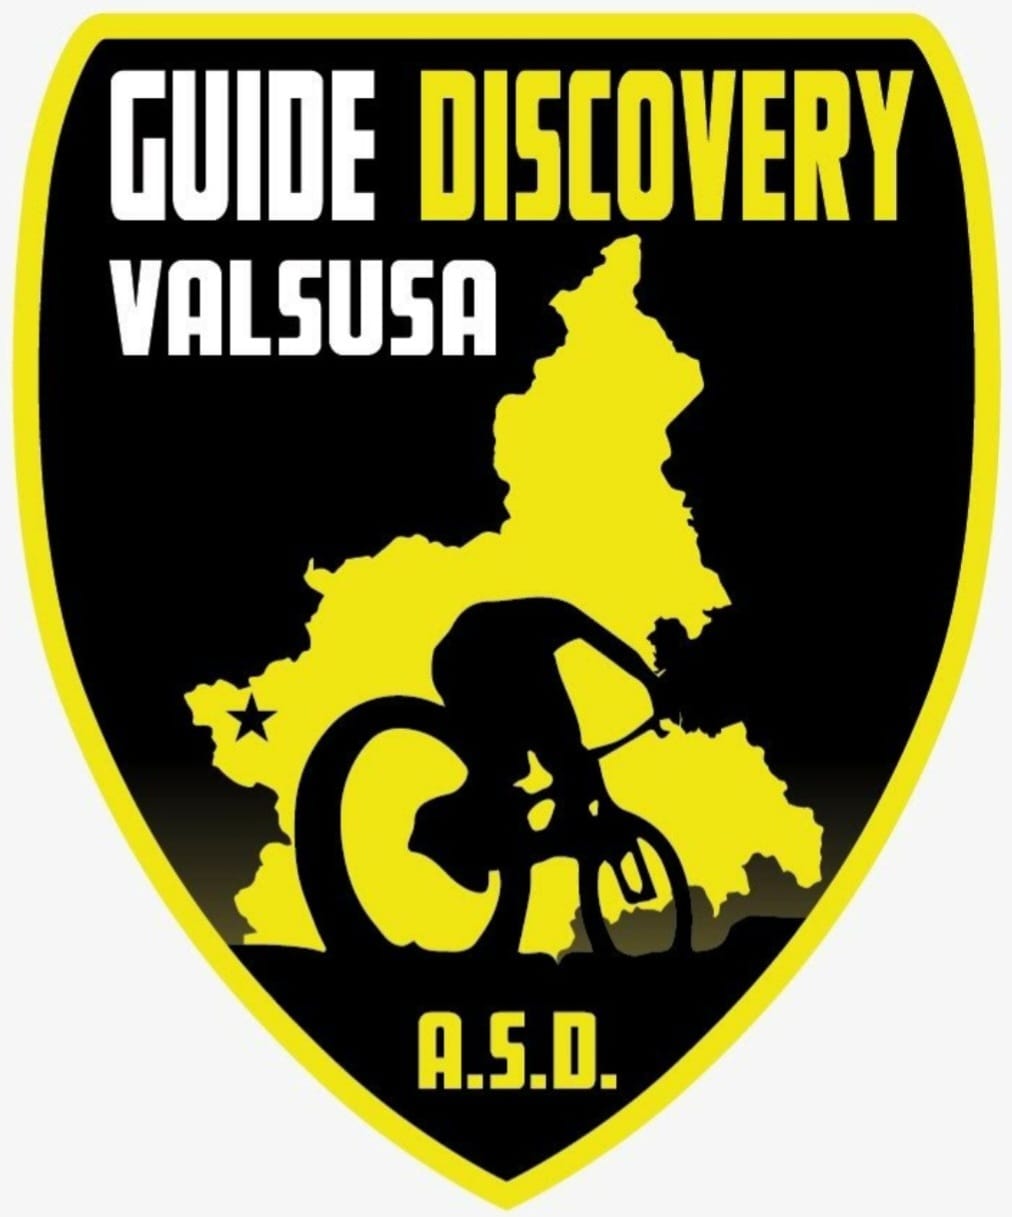 Guide Discovery Valsusa